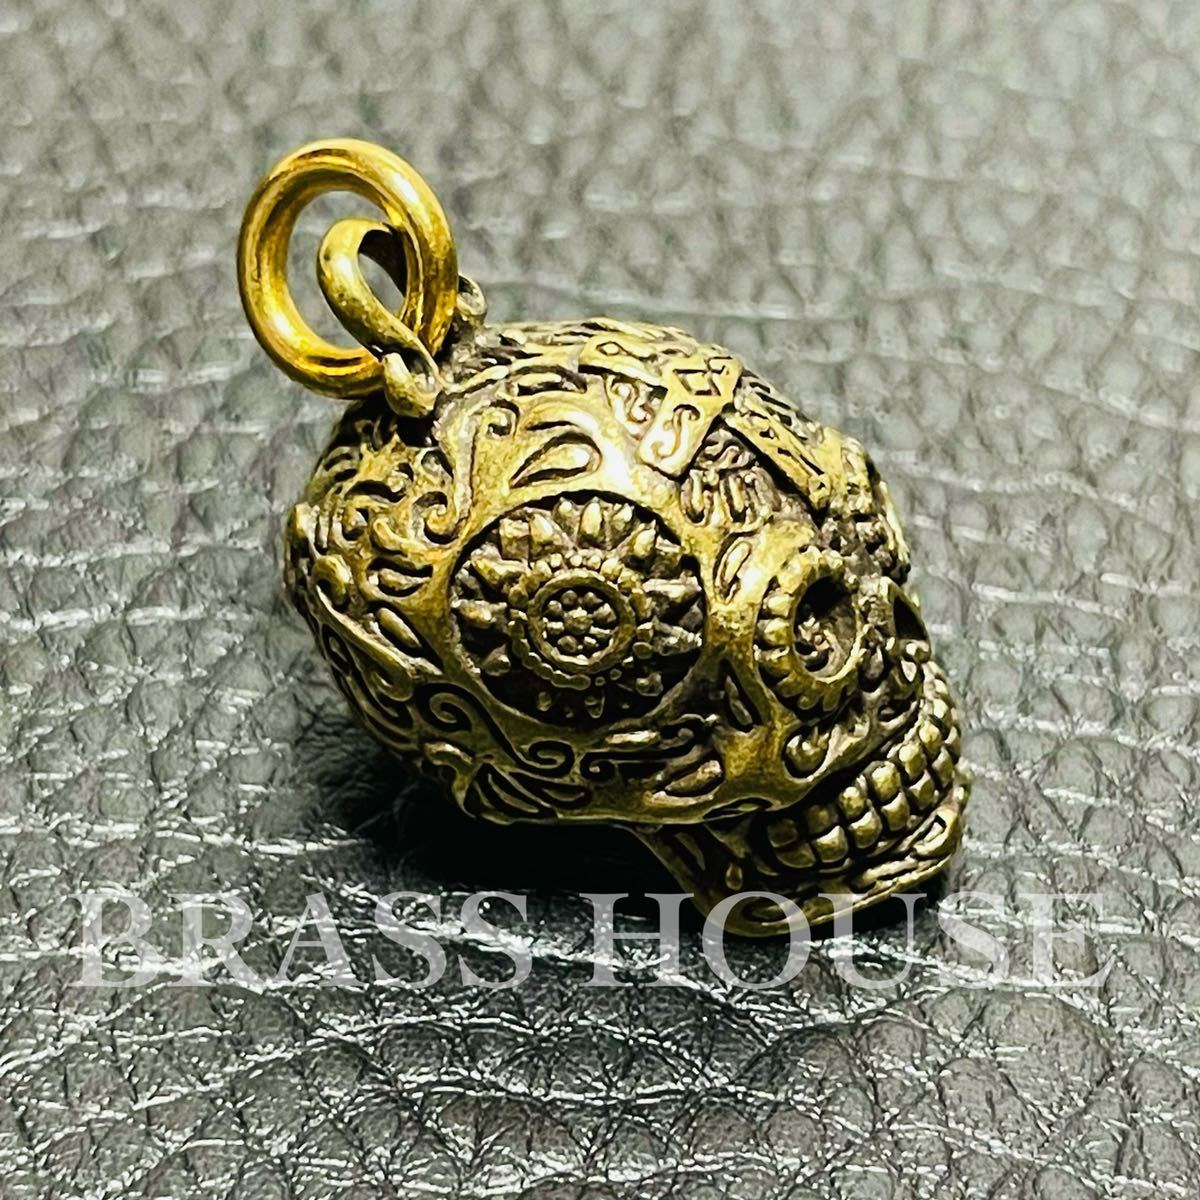 A4 brass made skull key holder meki deer n Skull . person. day li member mi-gaikotsu key ring necklace brass bike Gold 